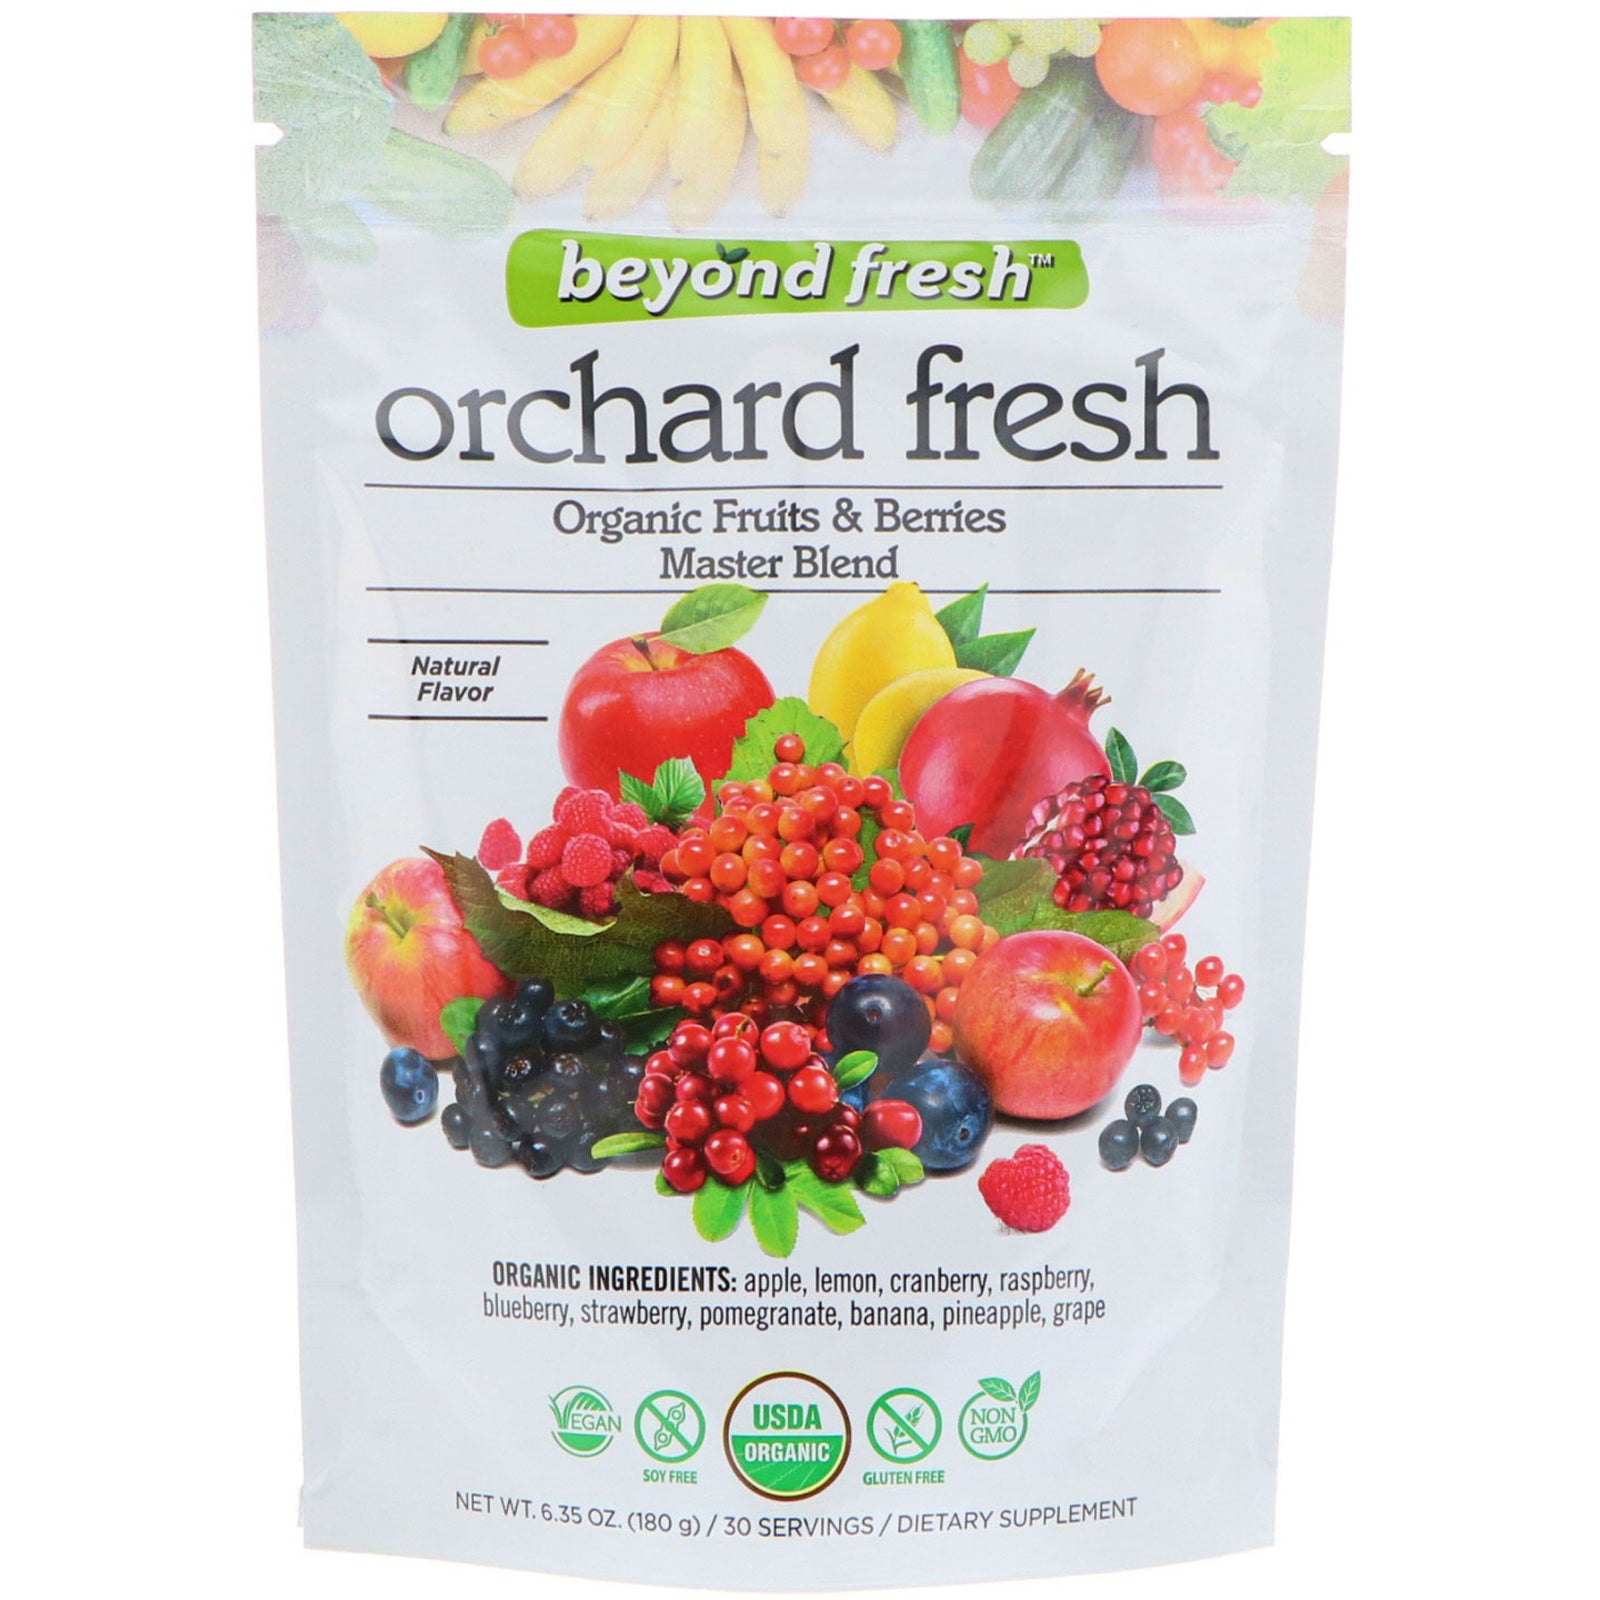 Beyond Fresh, Orchard Fresh, Organic Fruits & Berries Master Blend, Natural Flavor, 6.35 oz (180 g)